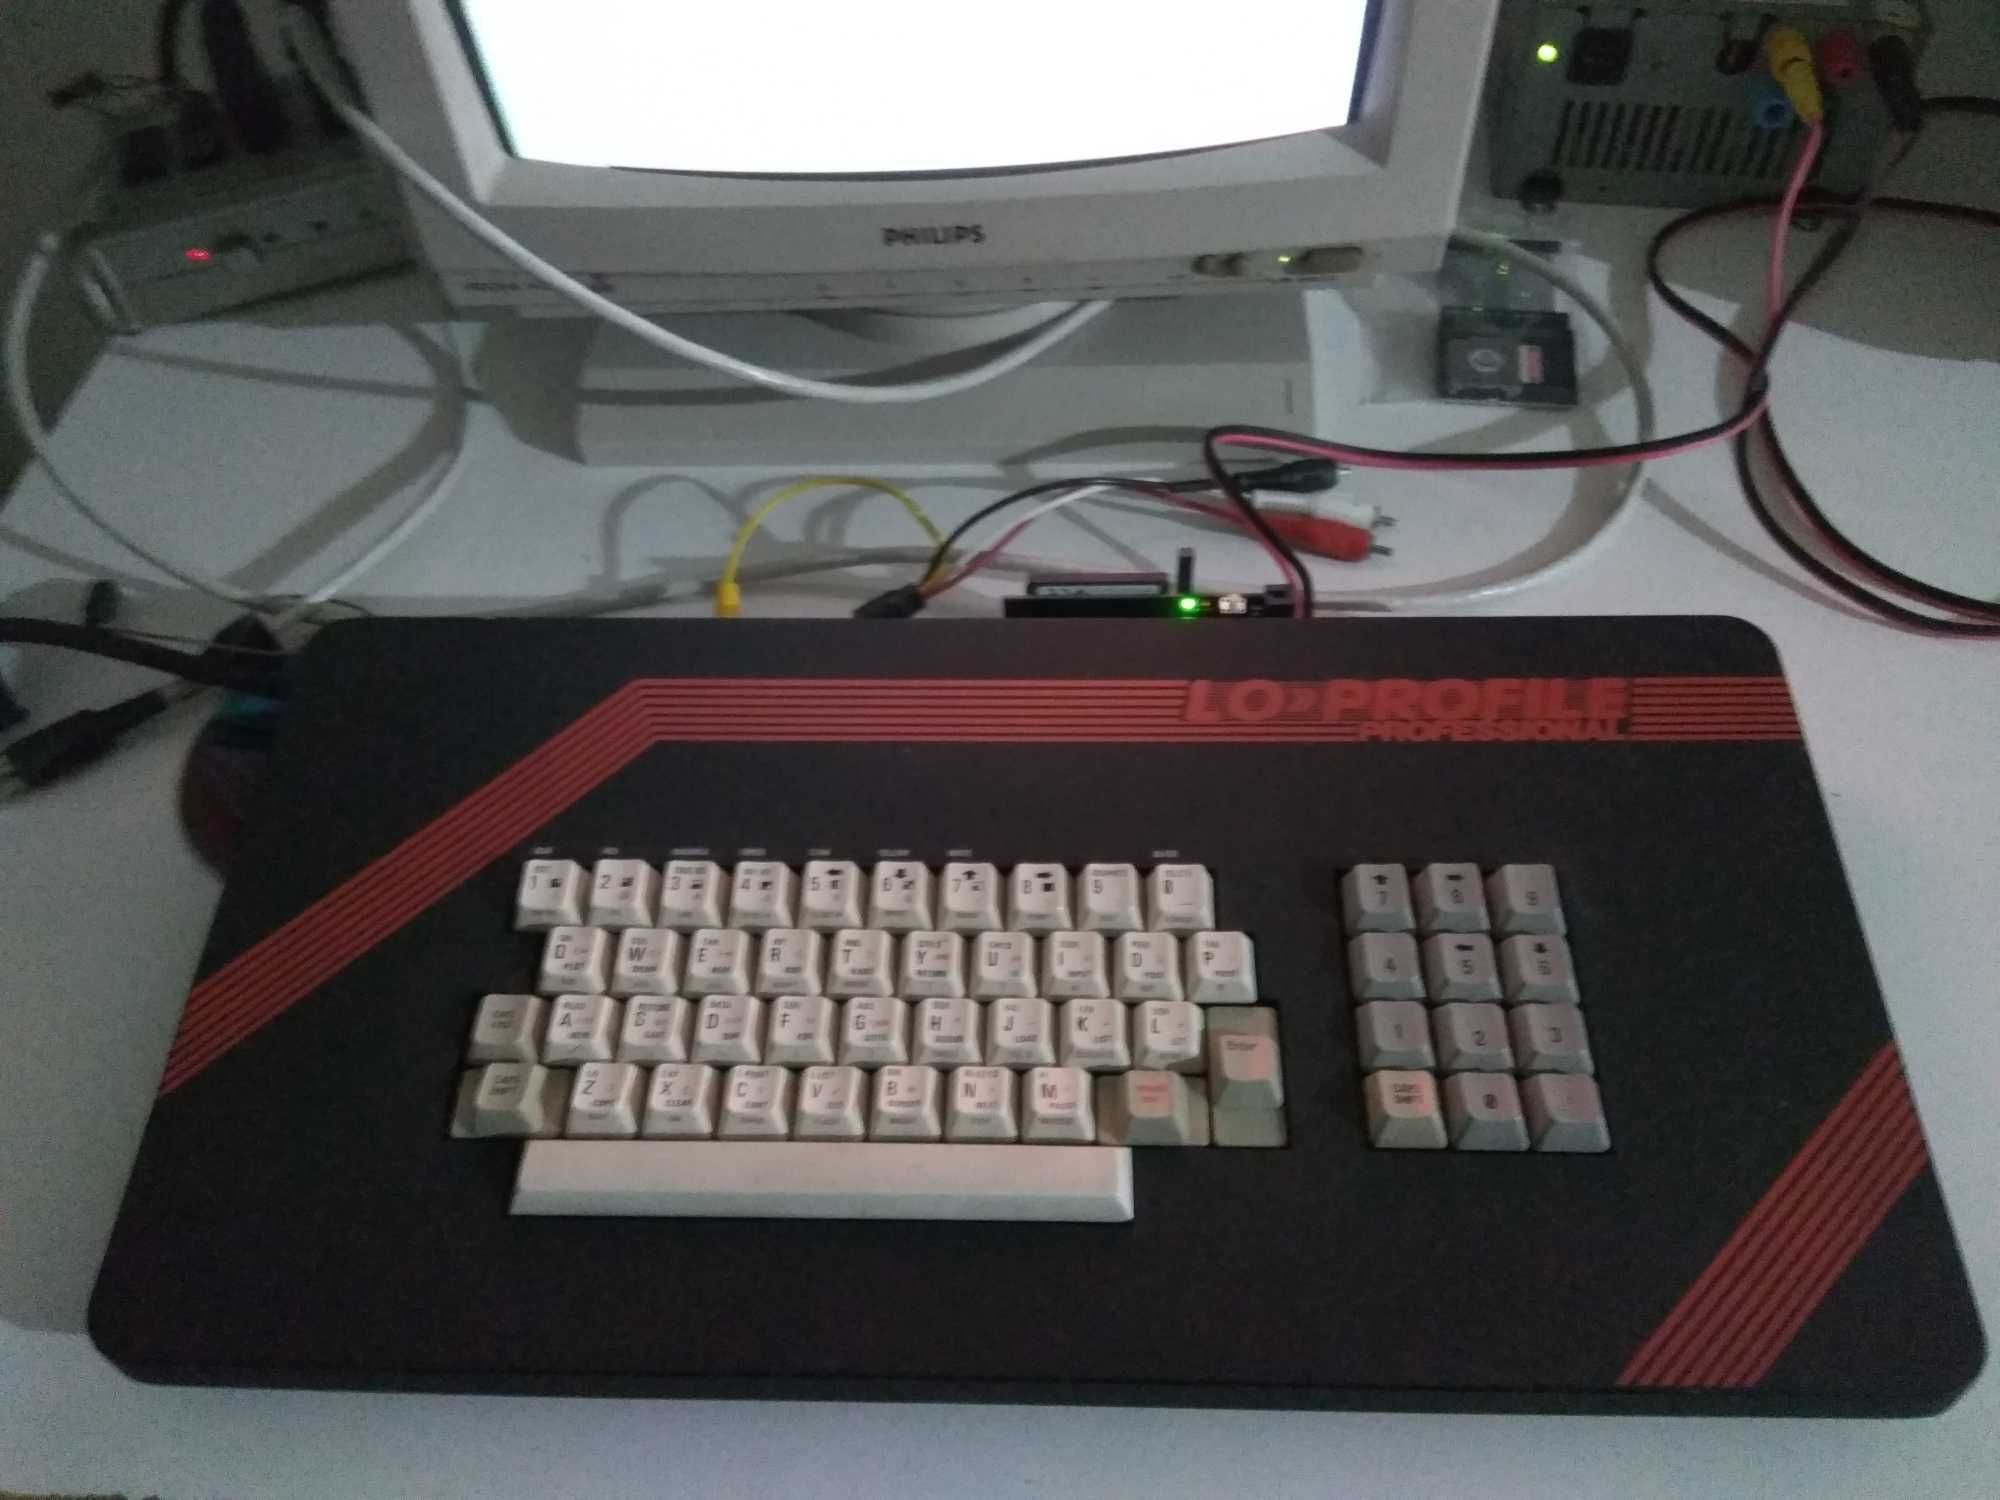 ZX Spectrum 48k com teclado profissional